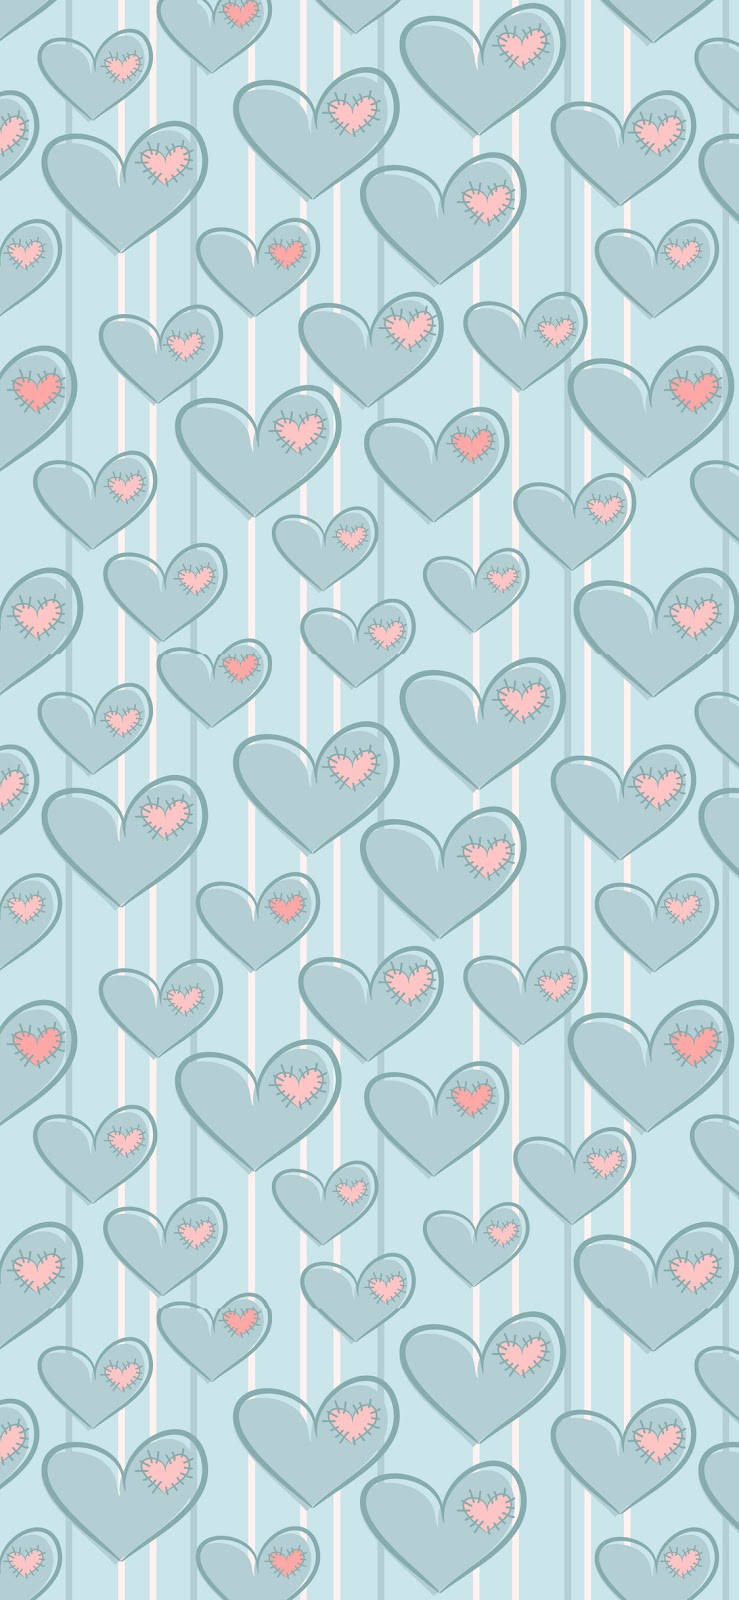 cute wallpaper hd,cute wallpaper iphone,cute wallpaper tumblr,cute wallpaper for laptop,cute wallpaper black,cute wallpaper pink,cute wallpaper blue,cute wallpaper anime